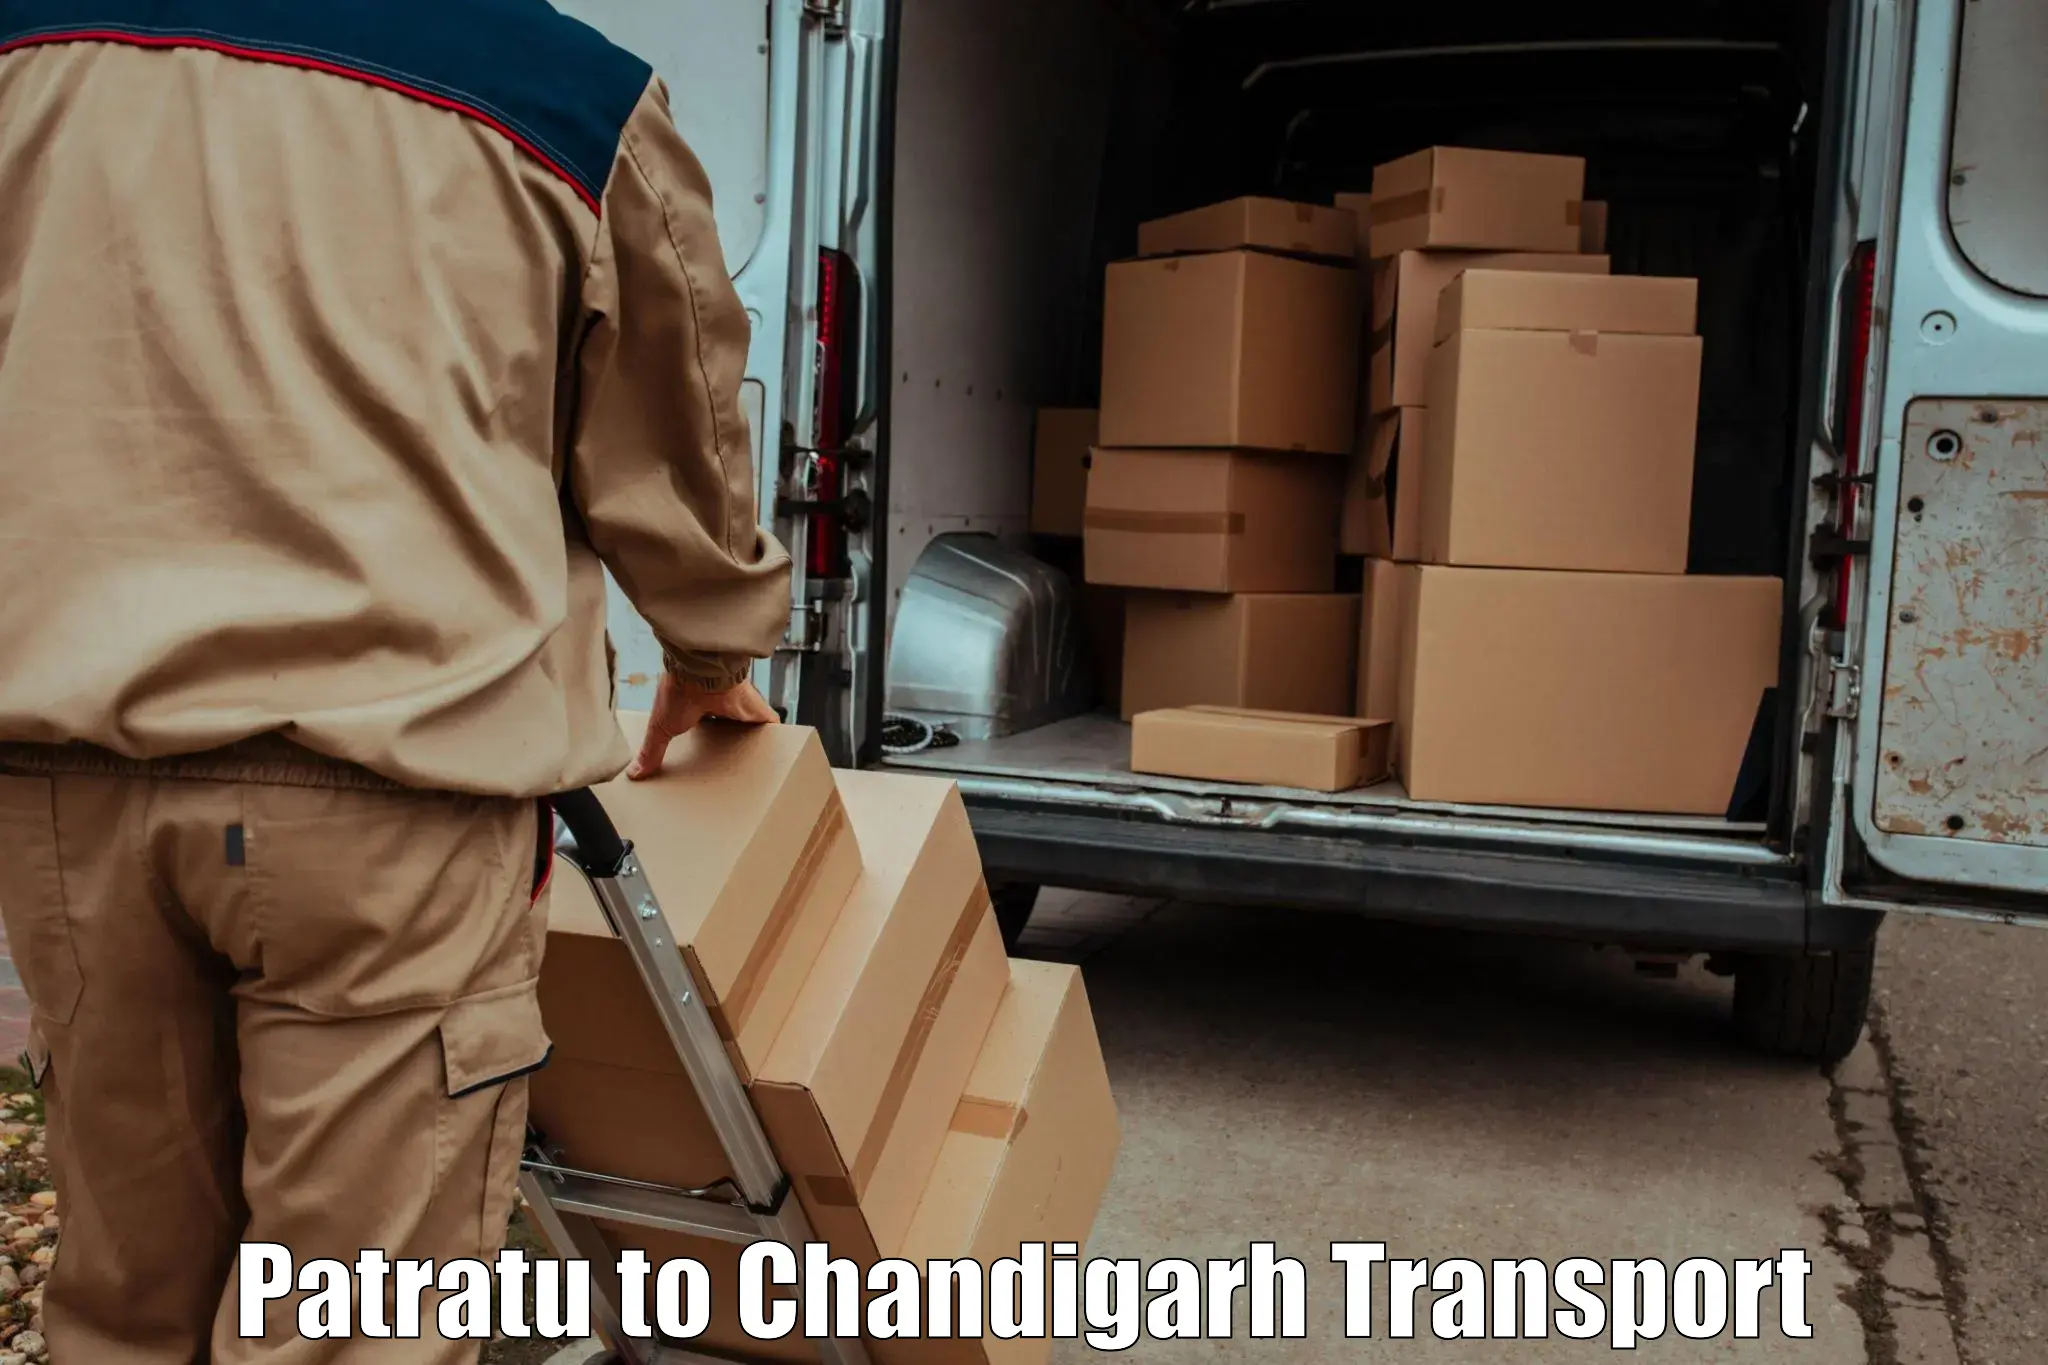 Container transport service Patratu to Chandigarh